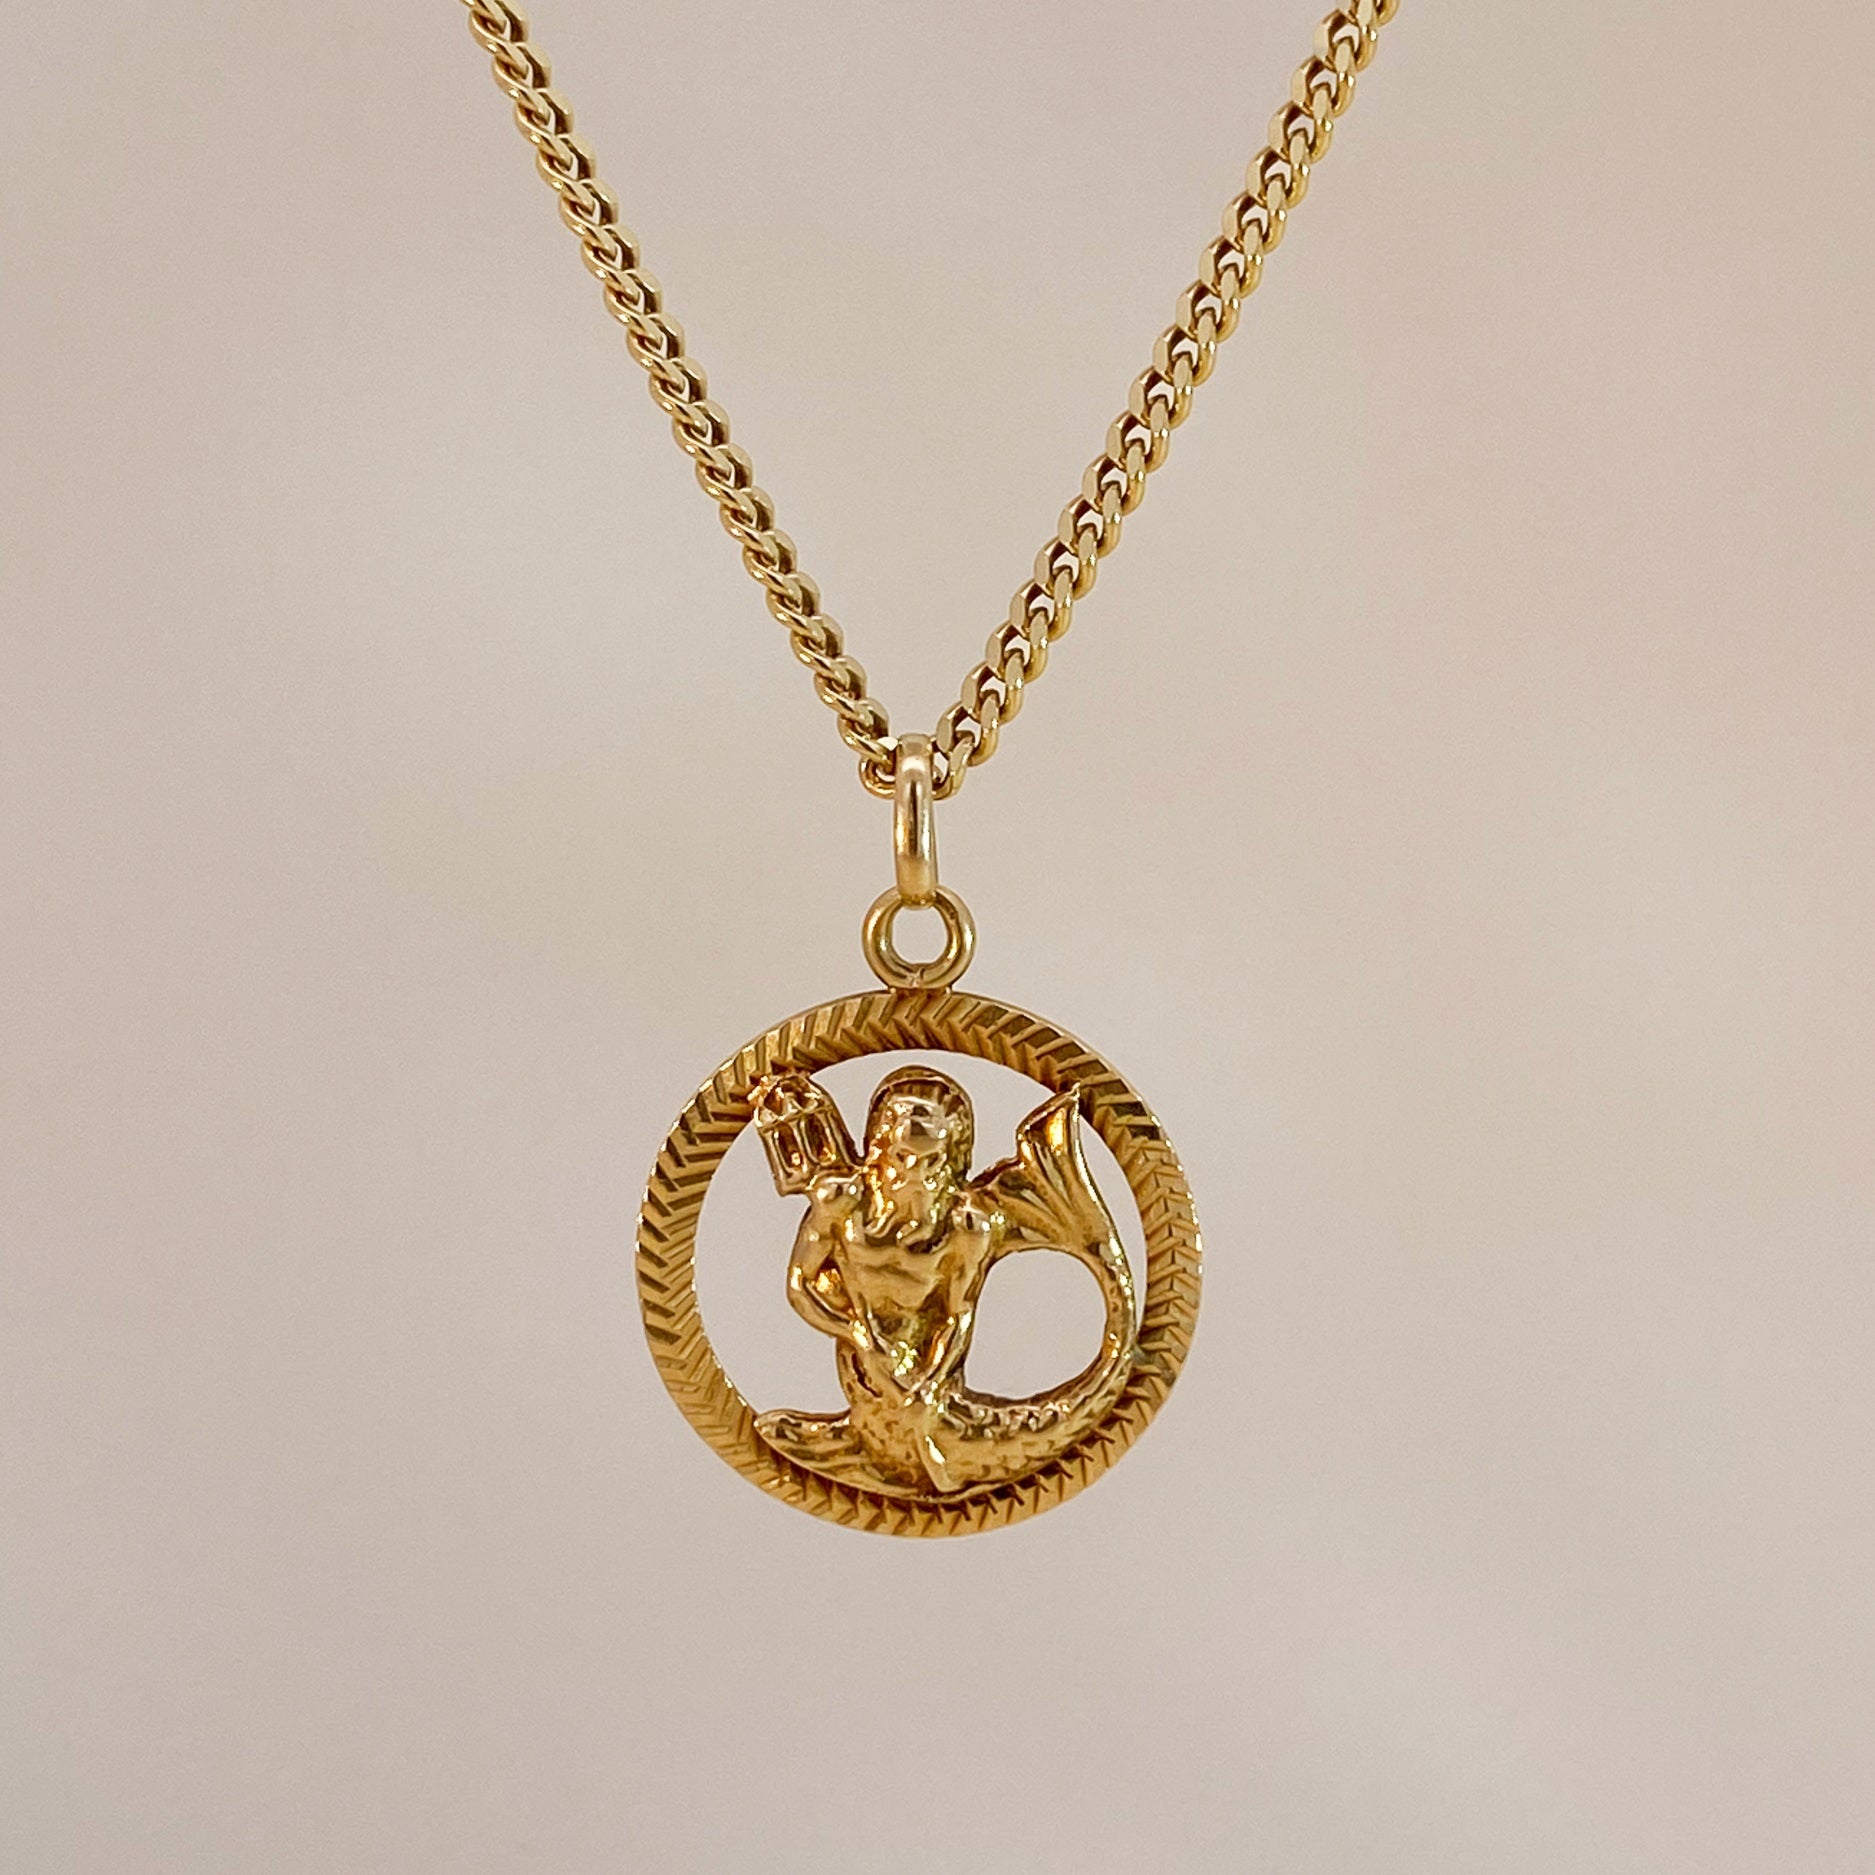 Vintage Aquarius Pendant Necklace